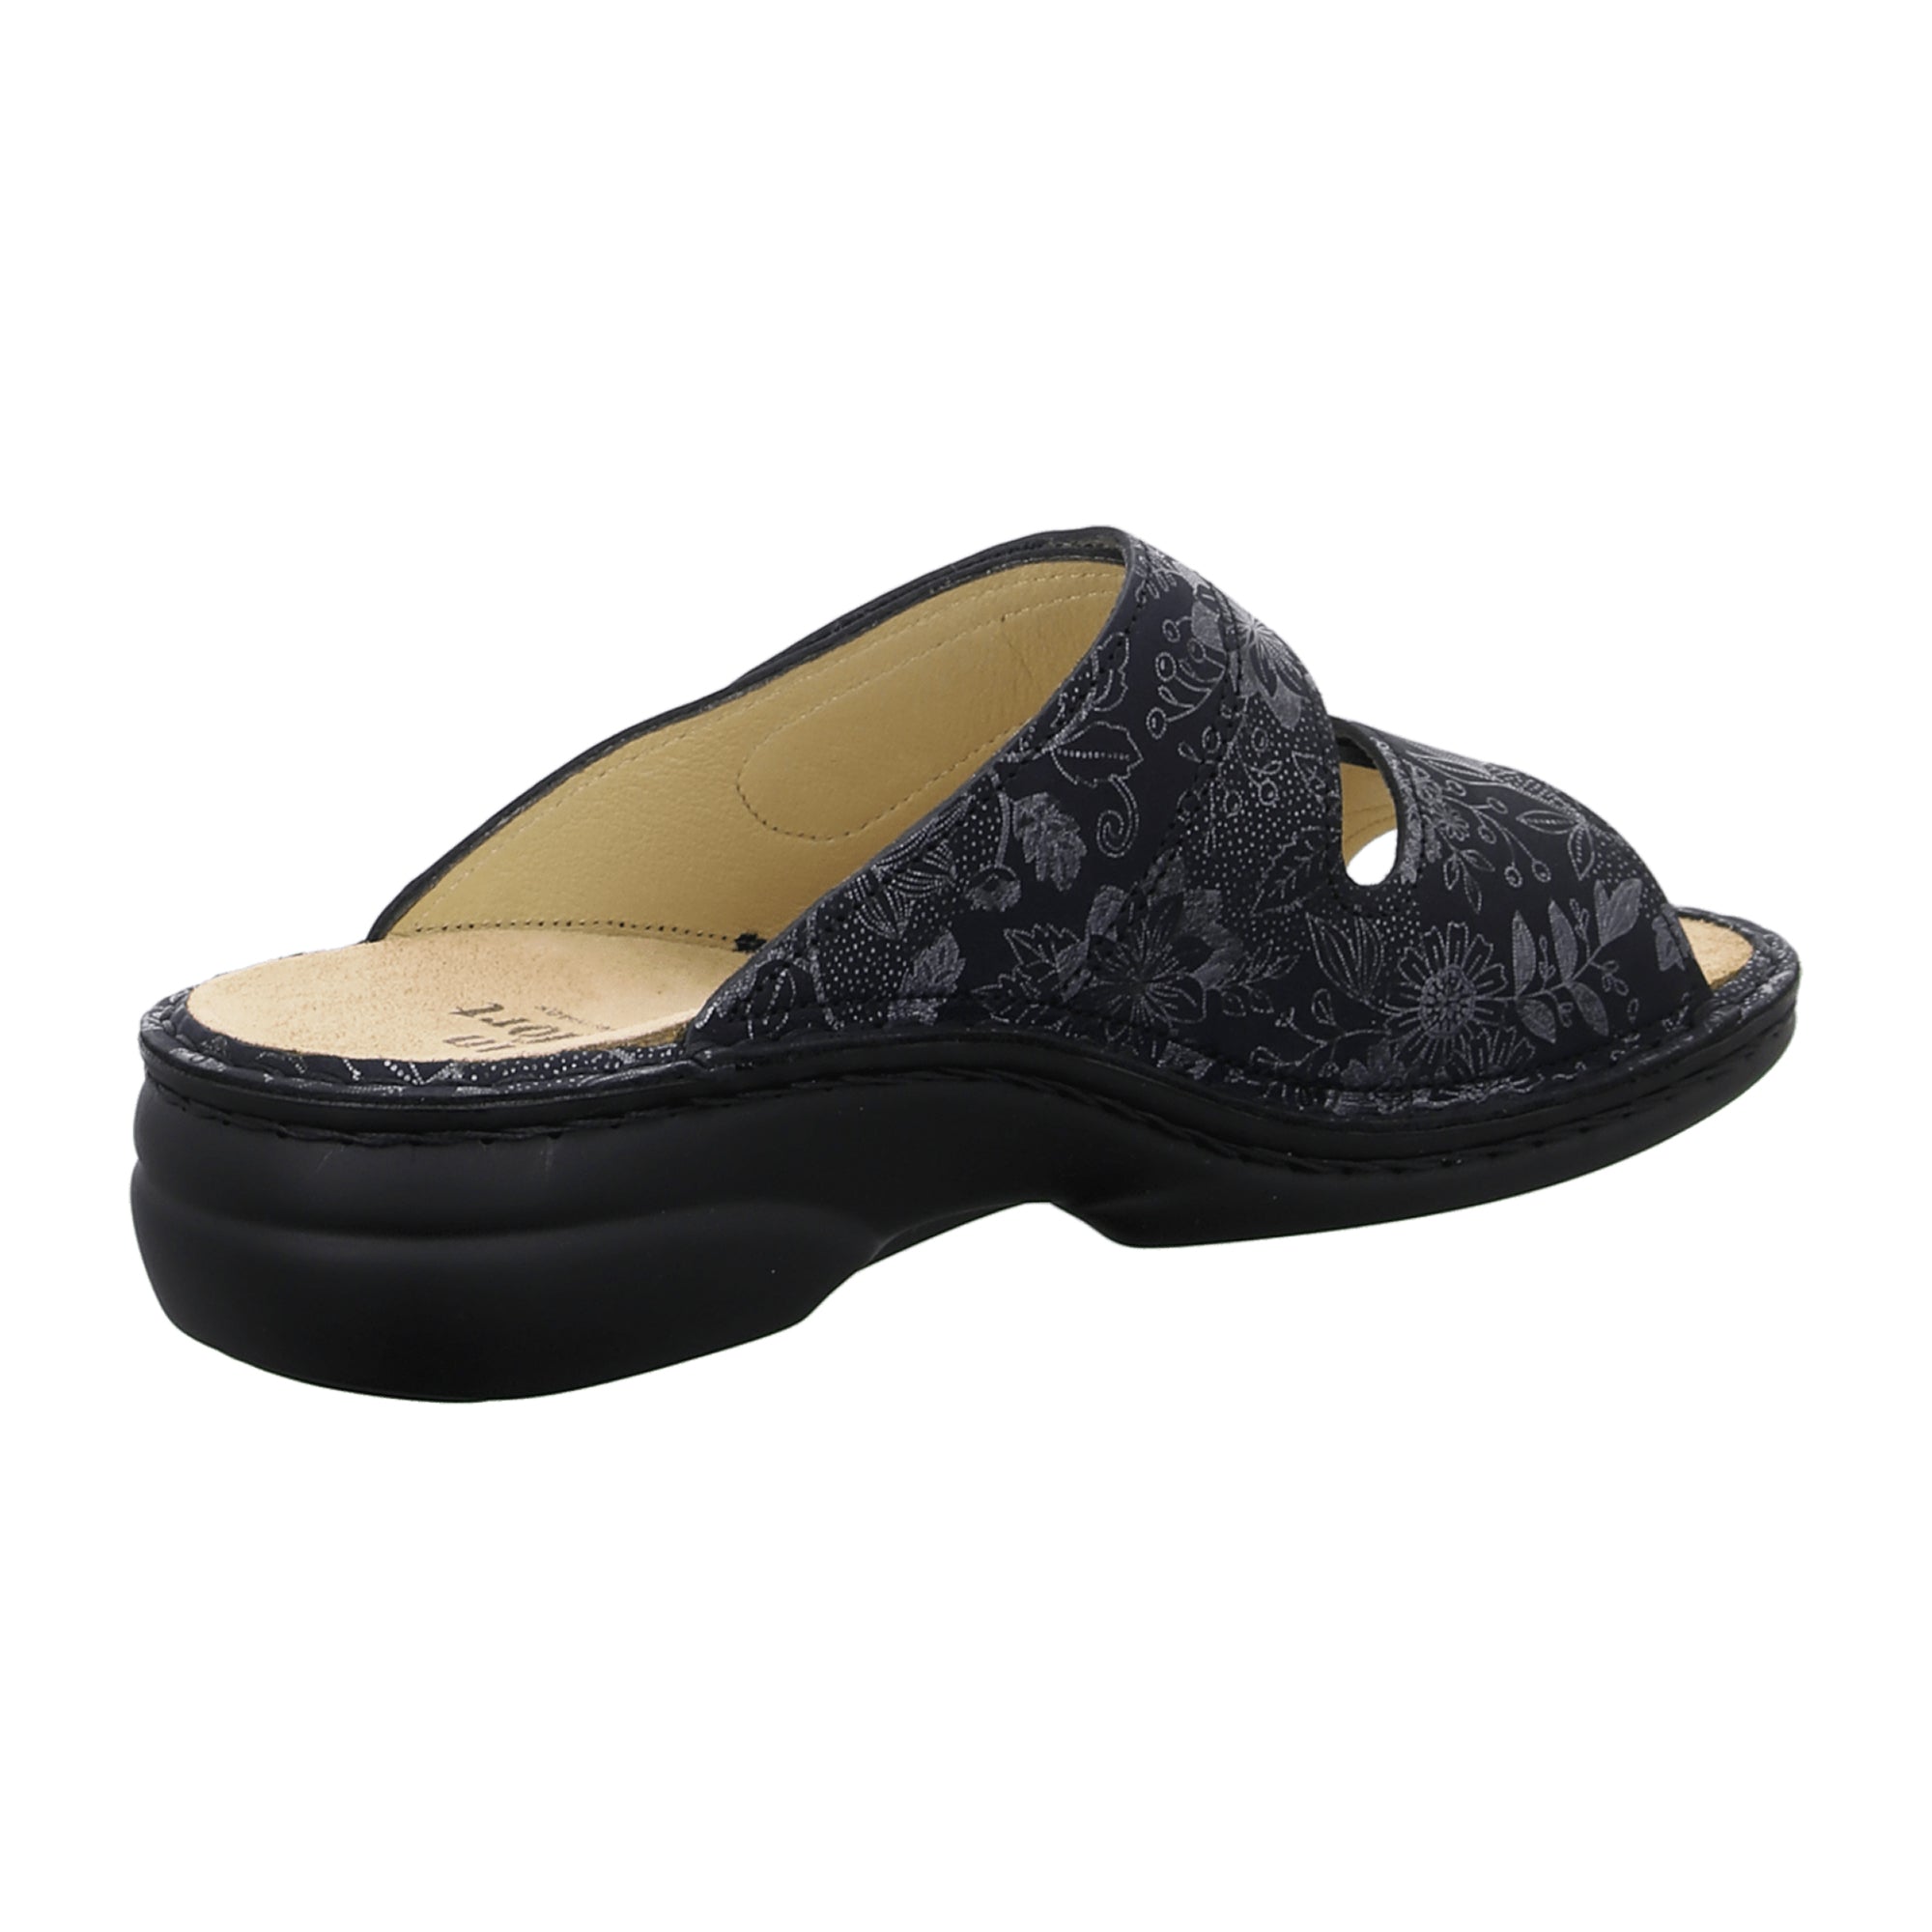 Finn Comfort Sansibar Women's Comfort Sandals - Stylish Gray